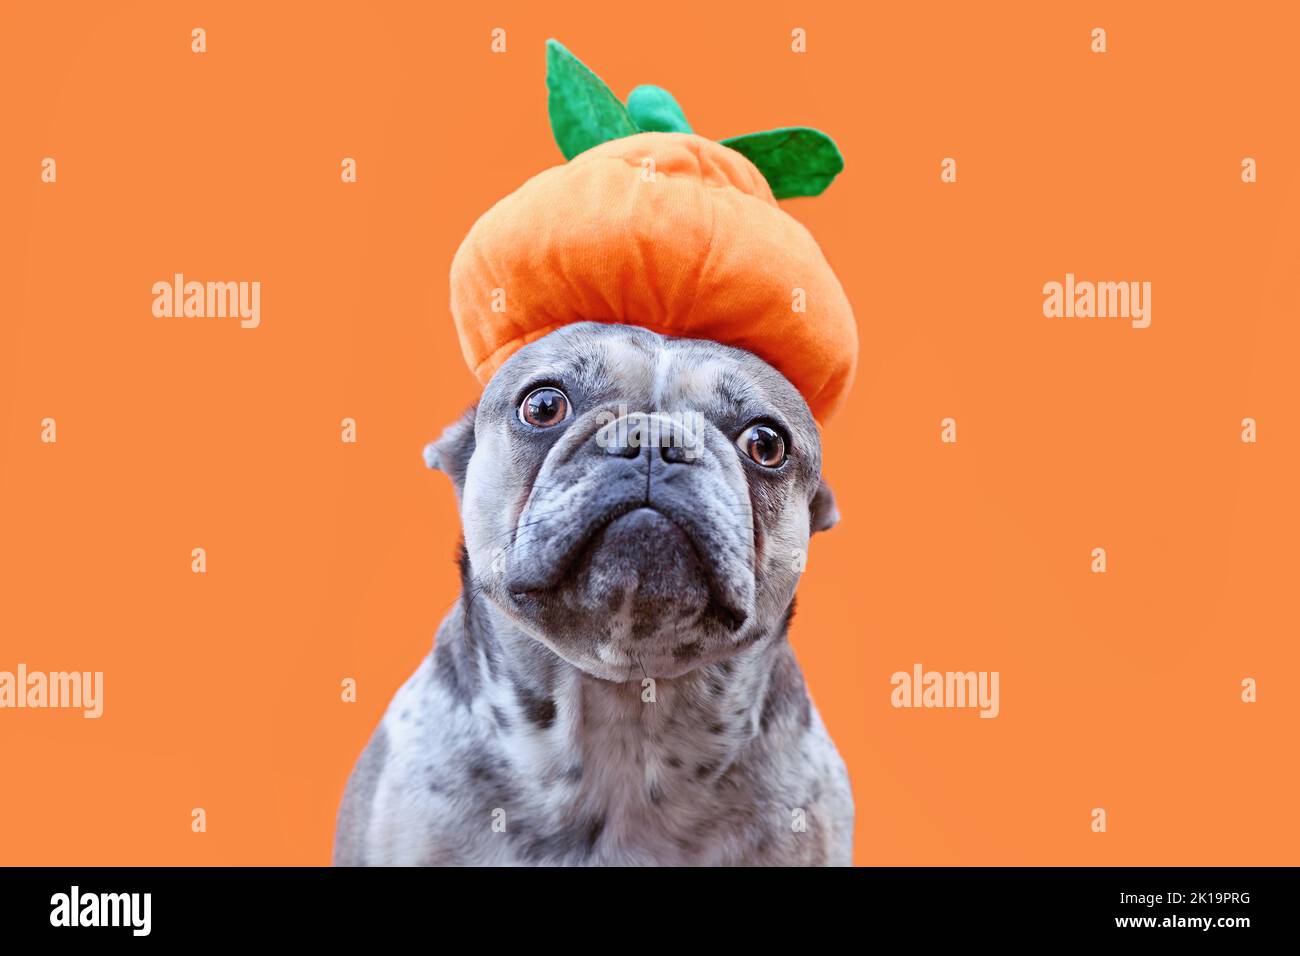 Funny French Bulldog dog with Halloween pumpkin hat on orange background Stock Photo